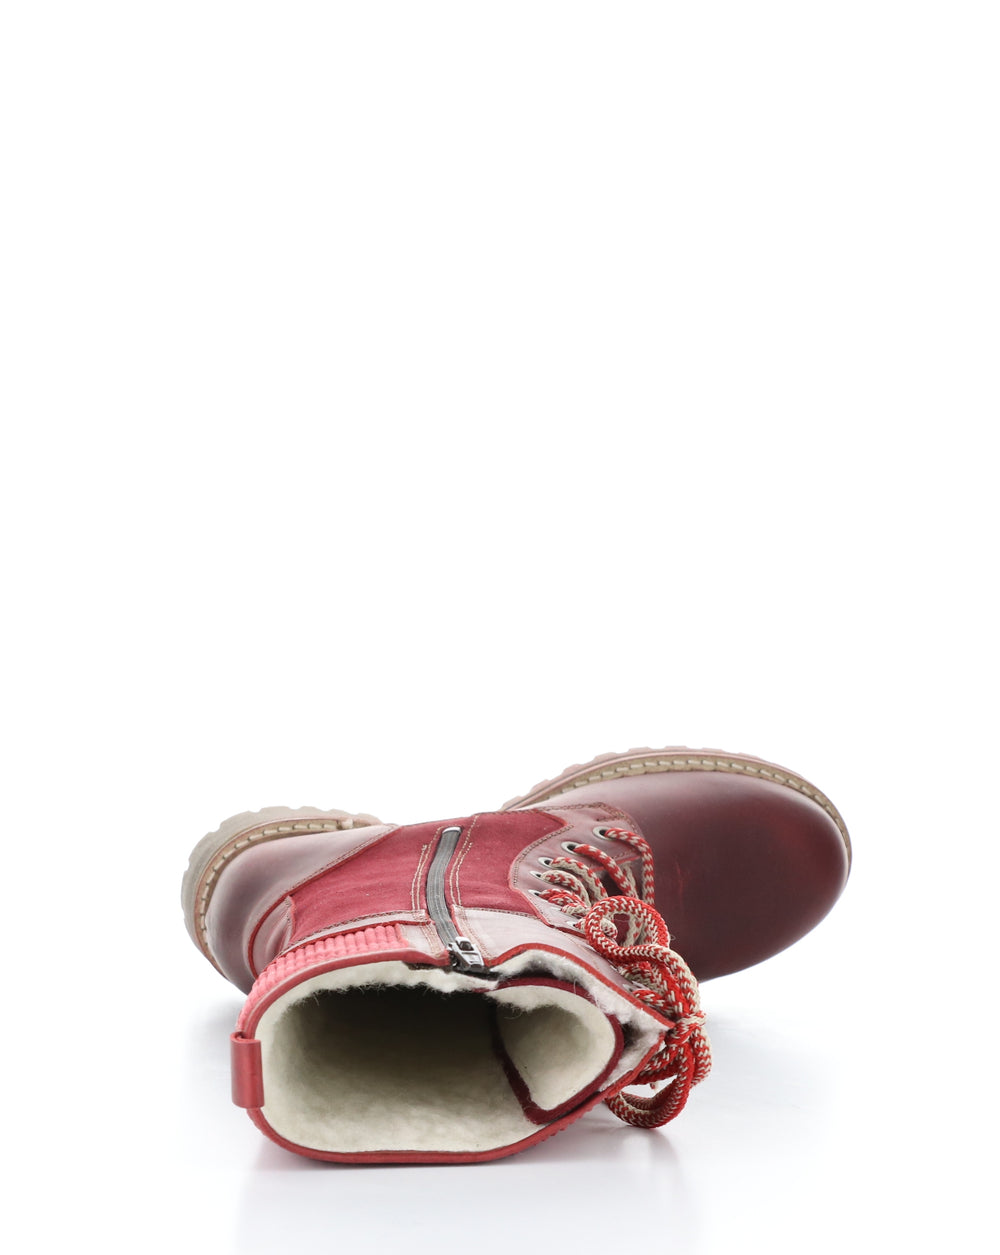 HALLOWED RED/SANGRIA/BORDO Round Toe Boots